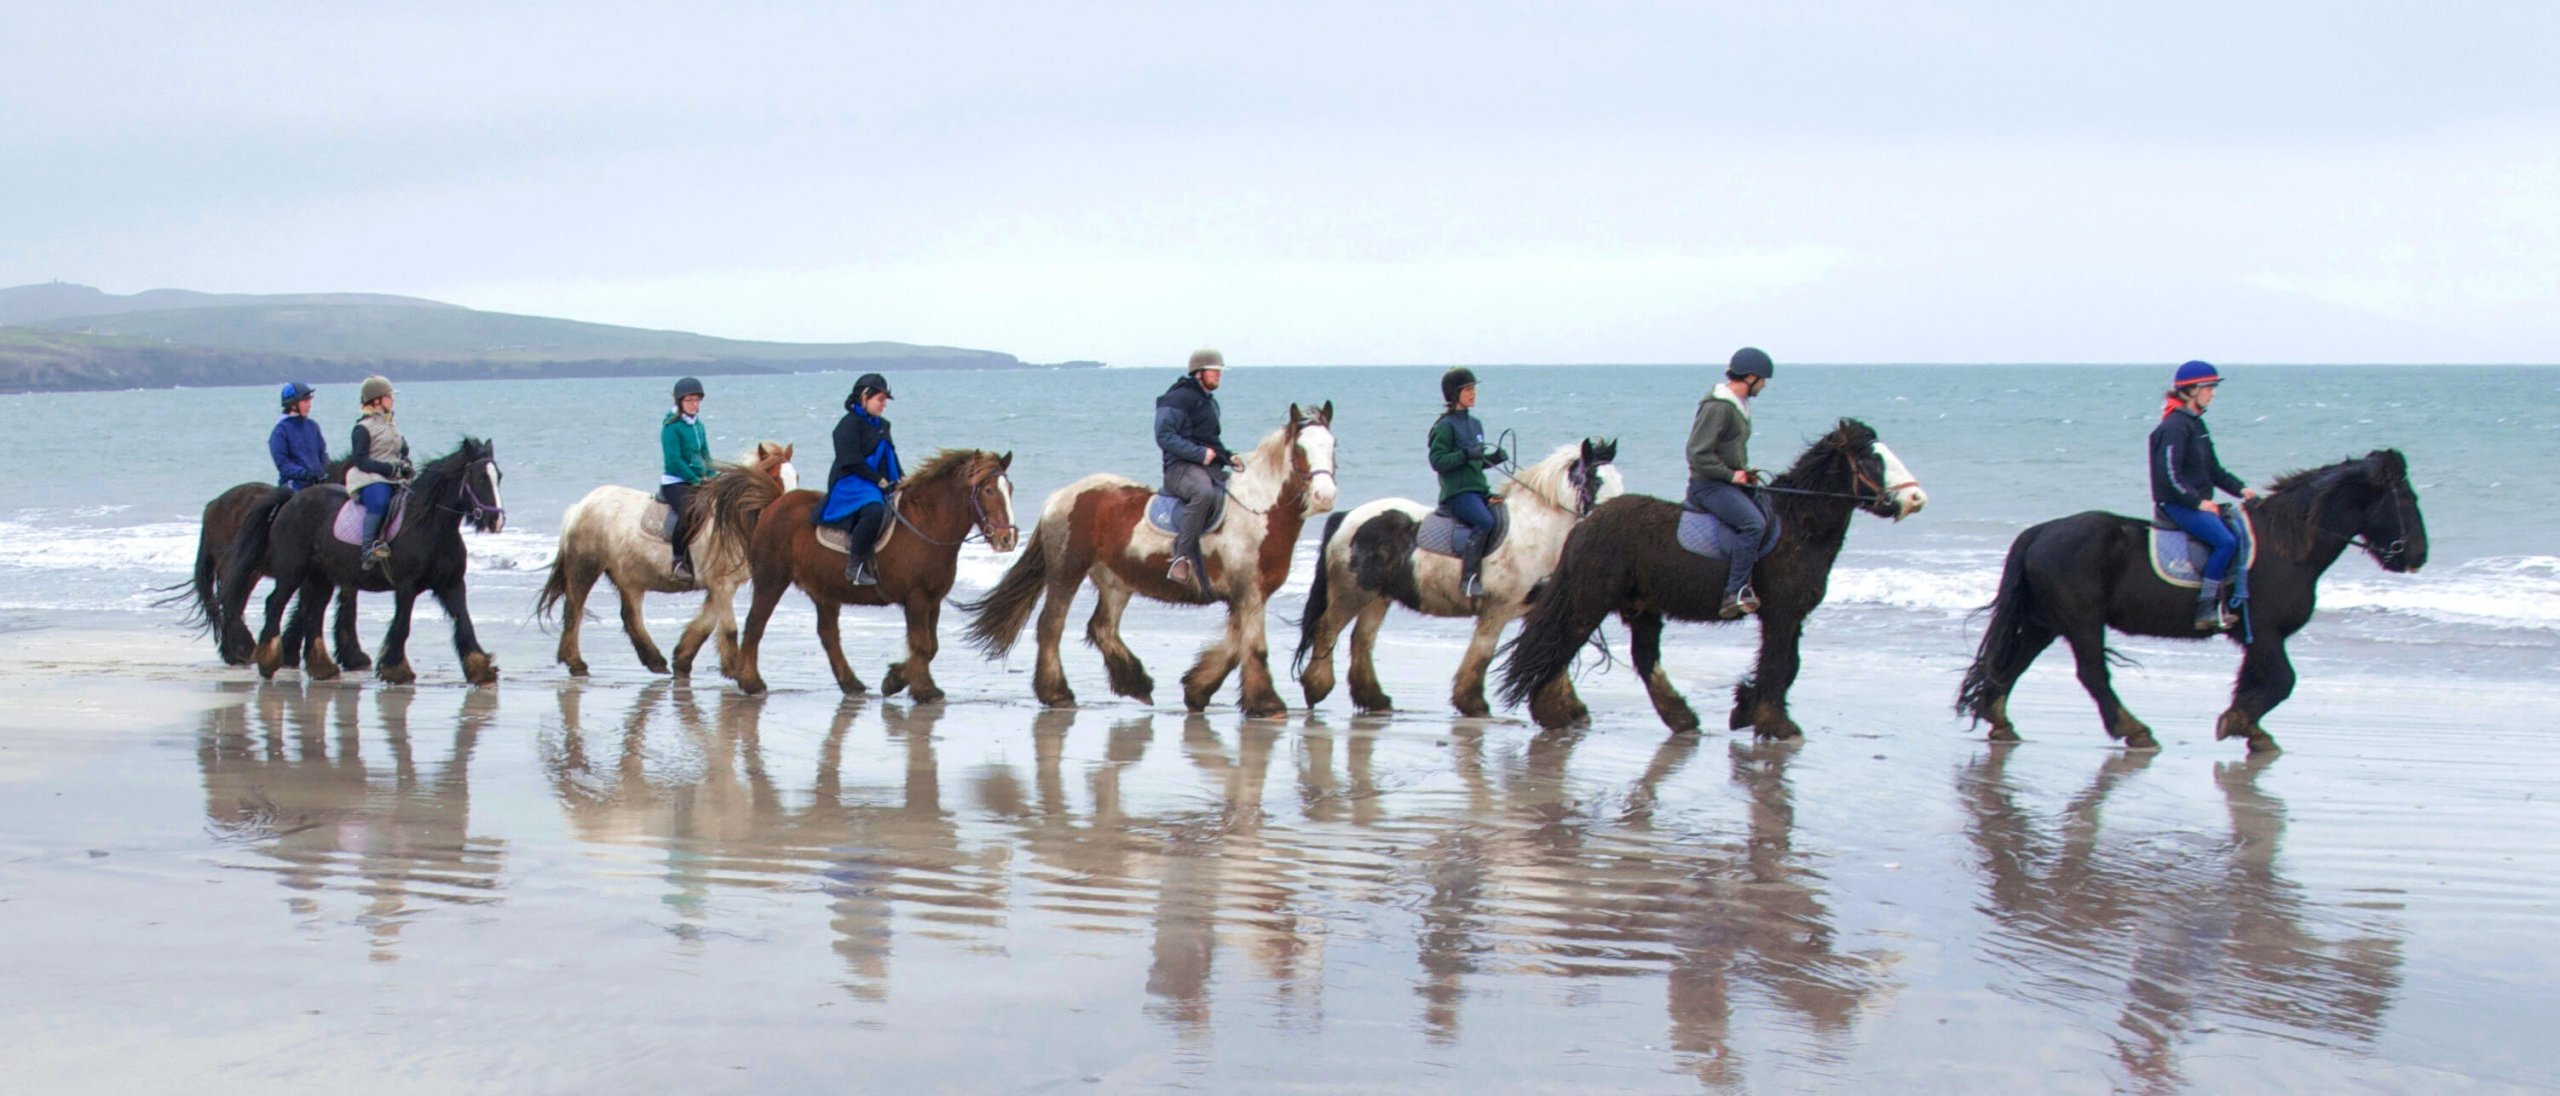 Ride horses along a wild beach on your active adventure tour of Ireland